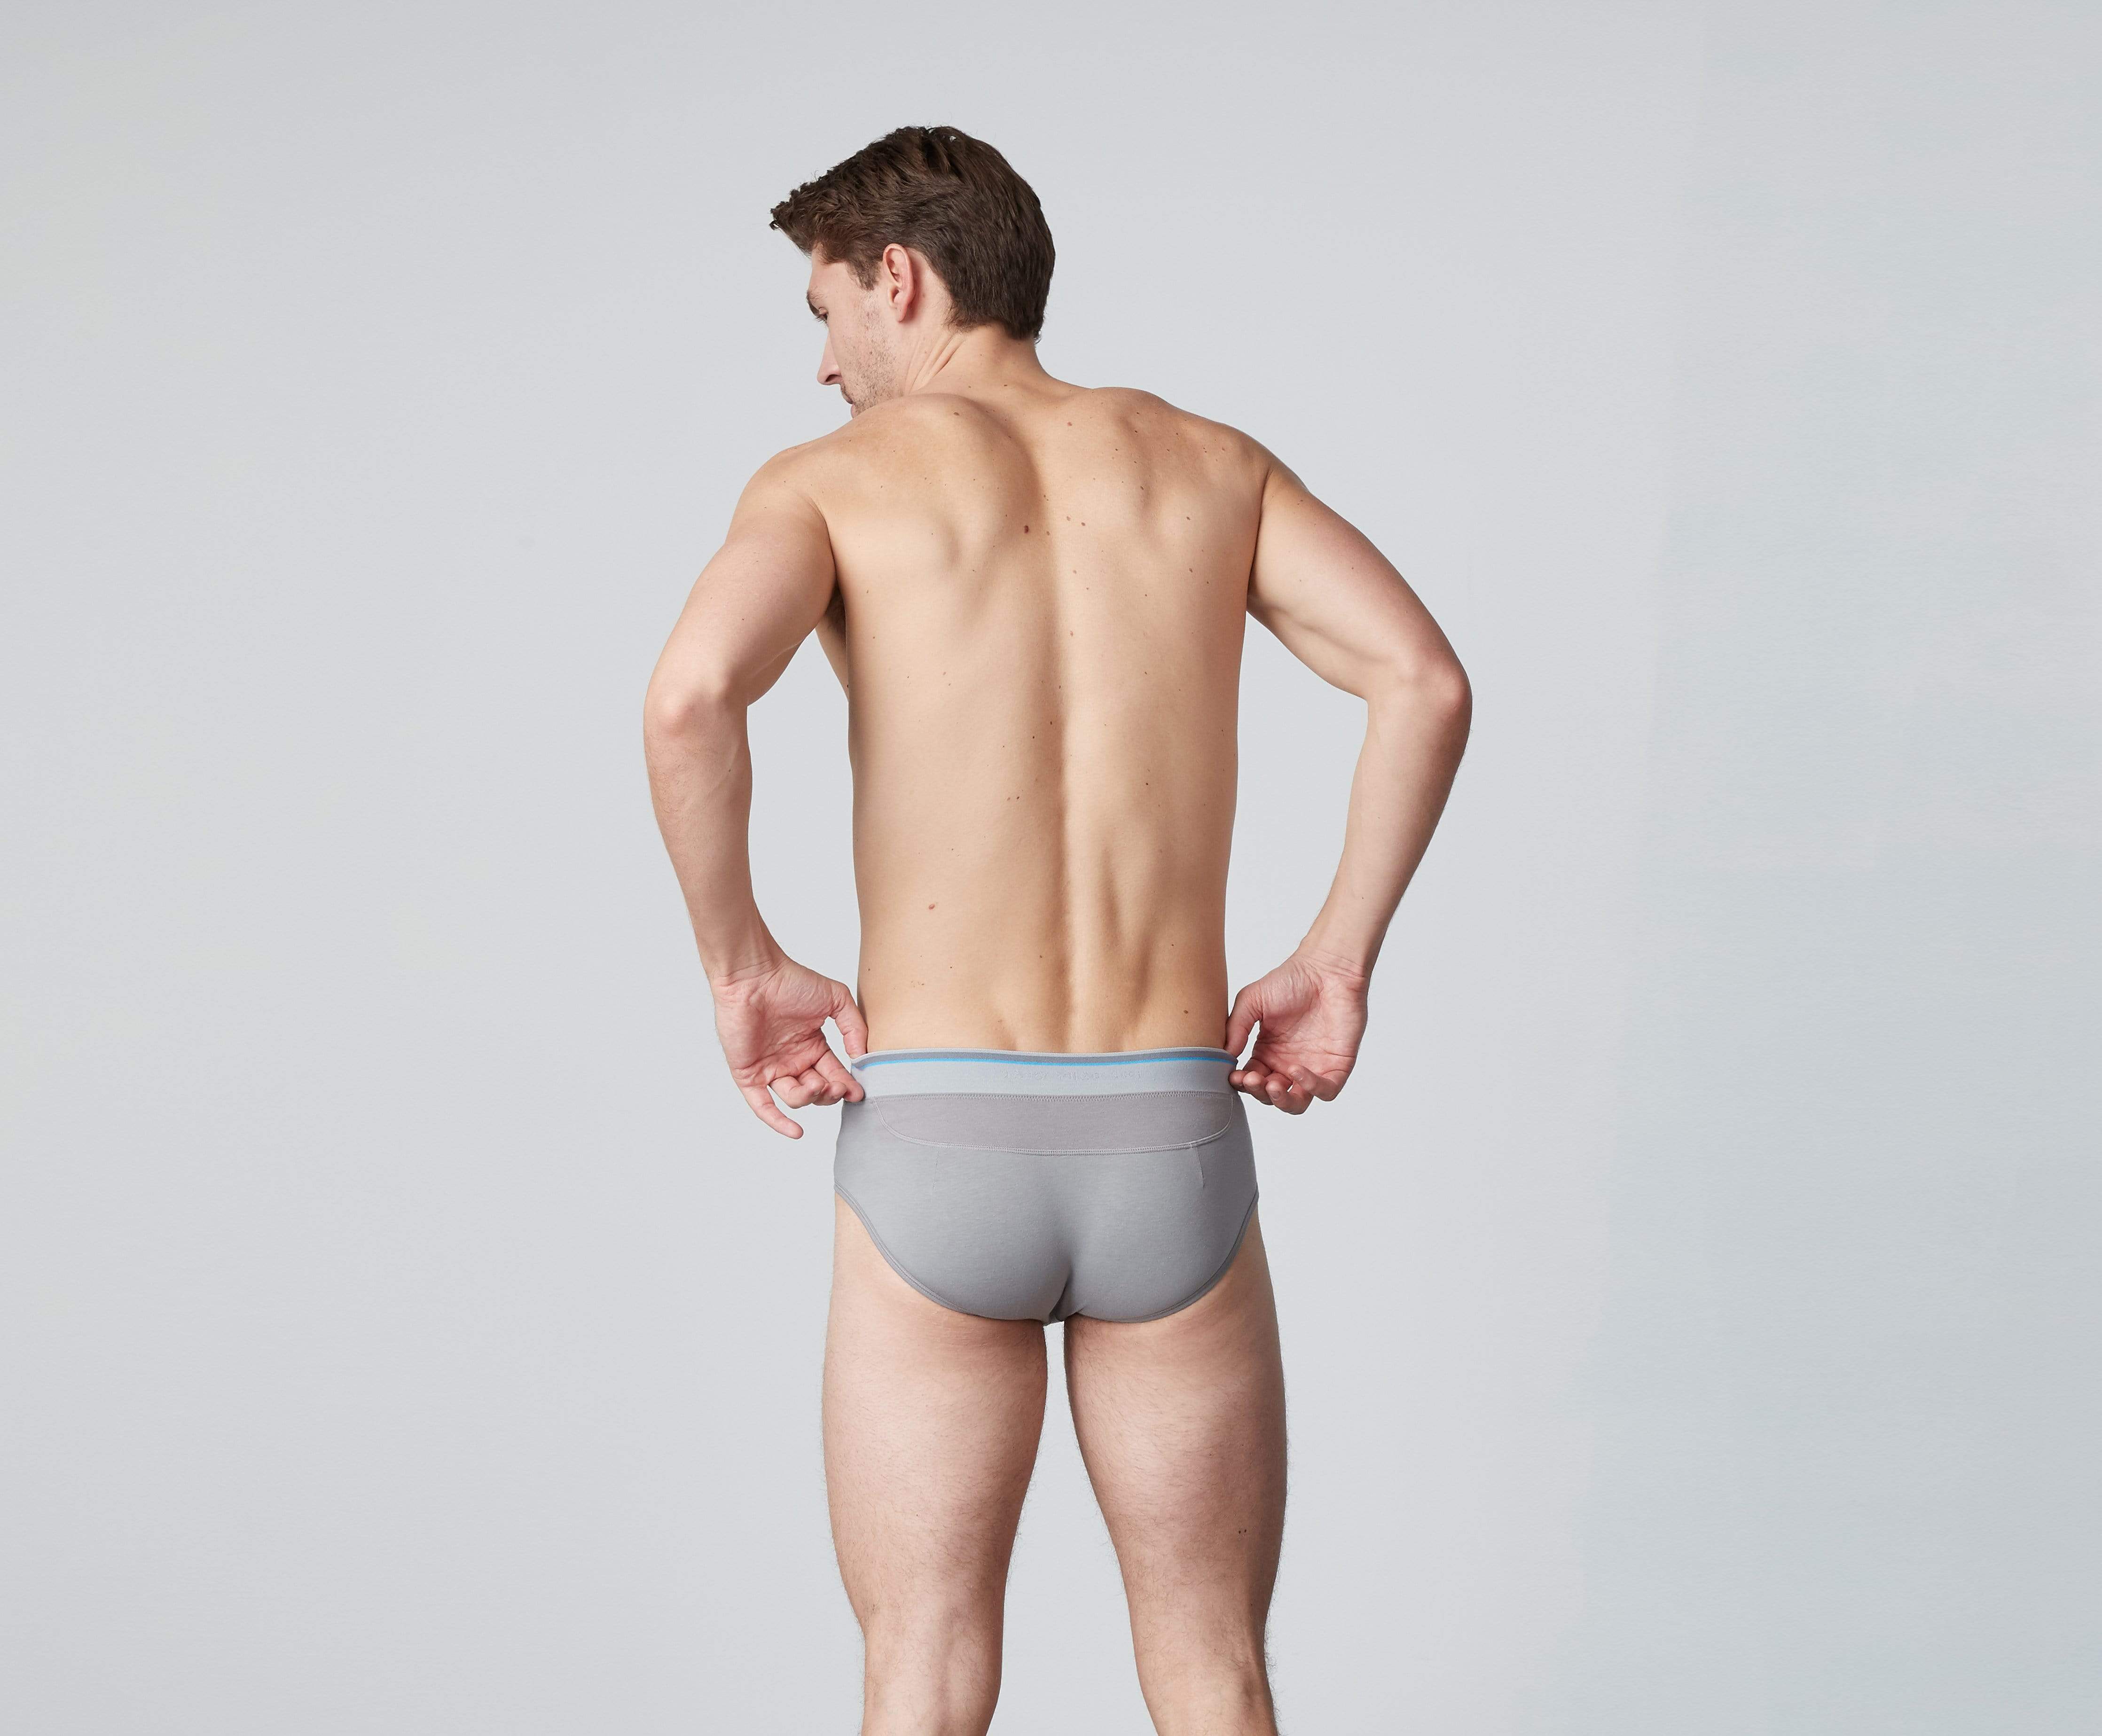  Mack Weldon Underwear For Men